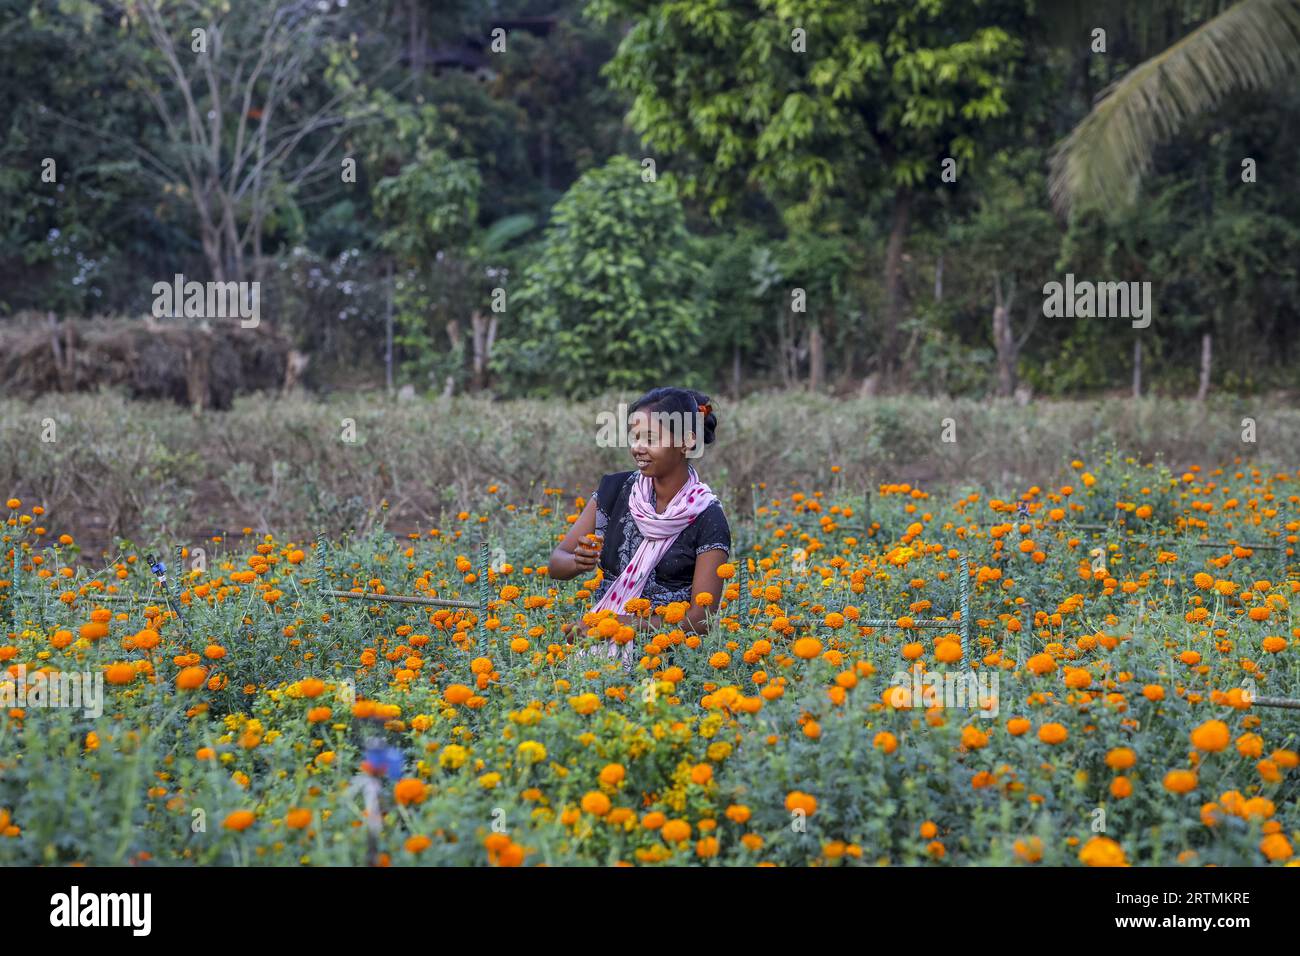 Gärtner pflückt Blumen in einem der Gärten des Goverdan Ecovillage, Maharashtra, Indien Stockfoto